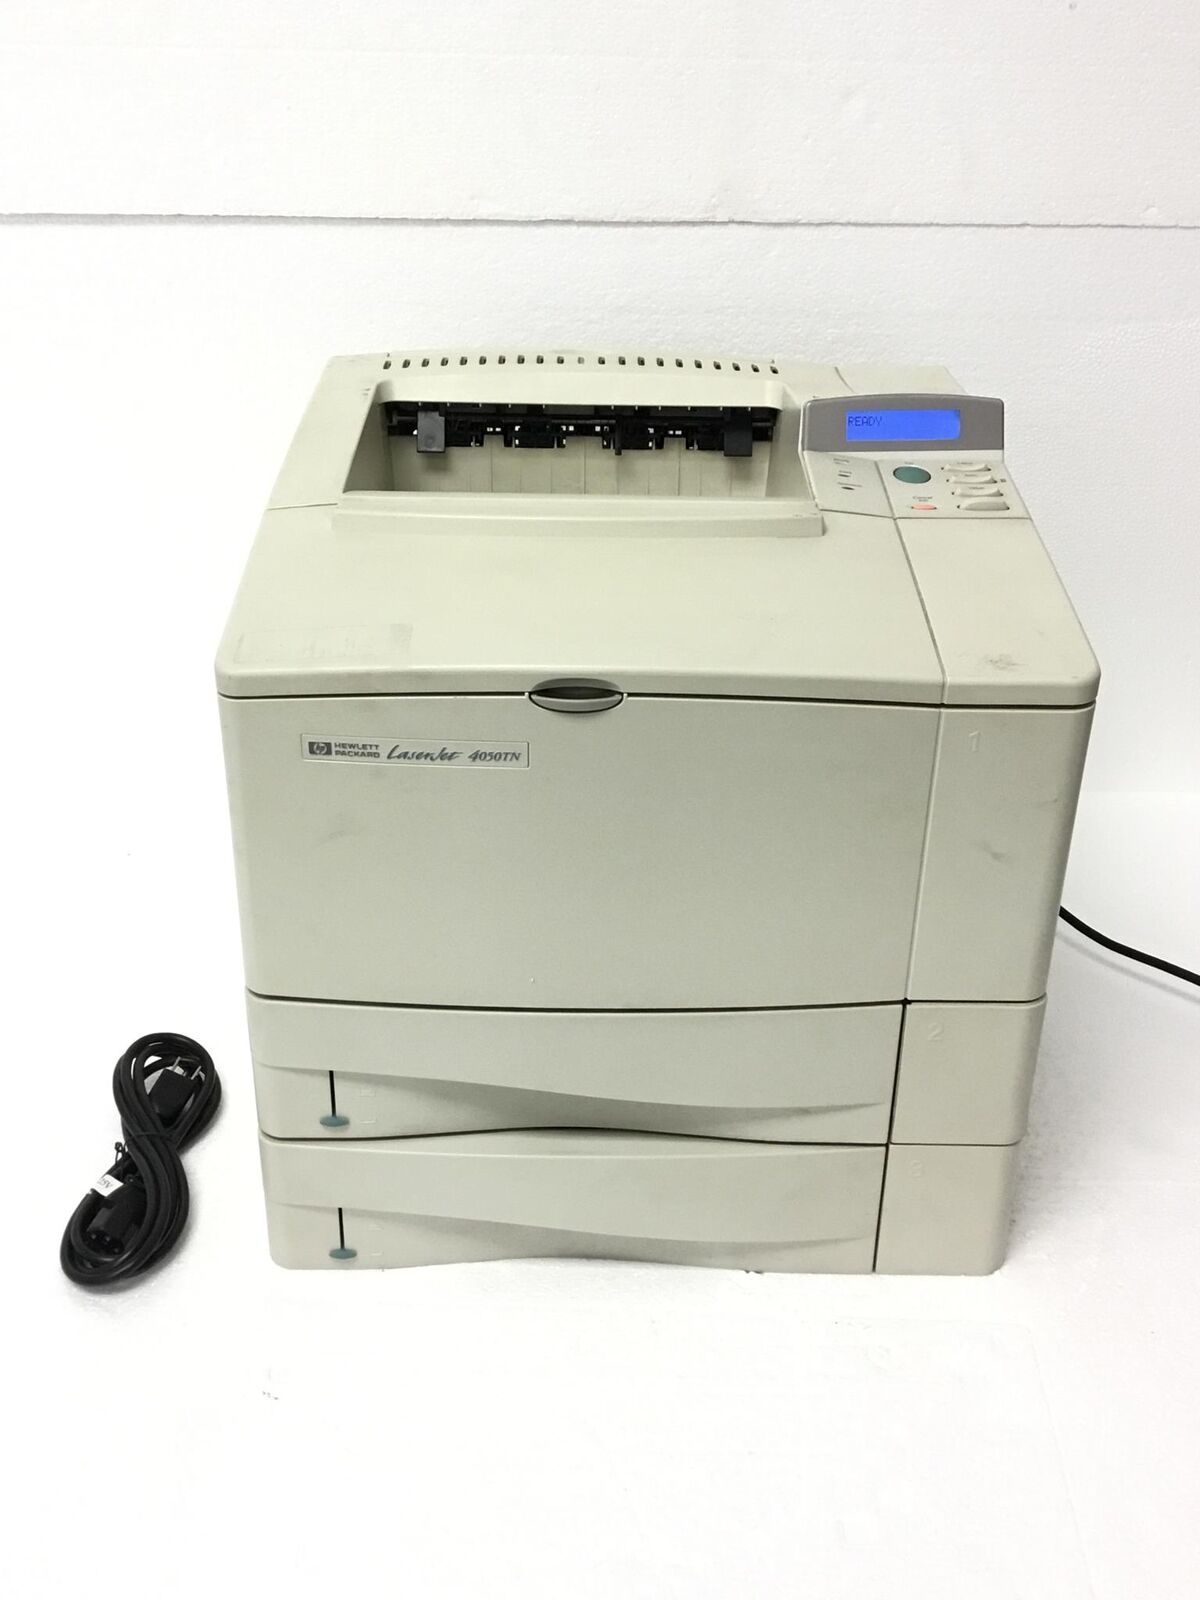 HP Laserjet 4050TN Workgroup Laser Printer w/Network Jetdirect 610N, no Toner